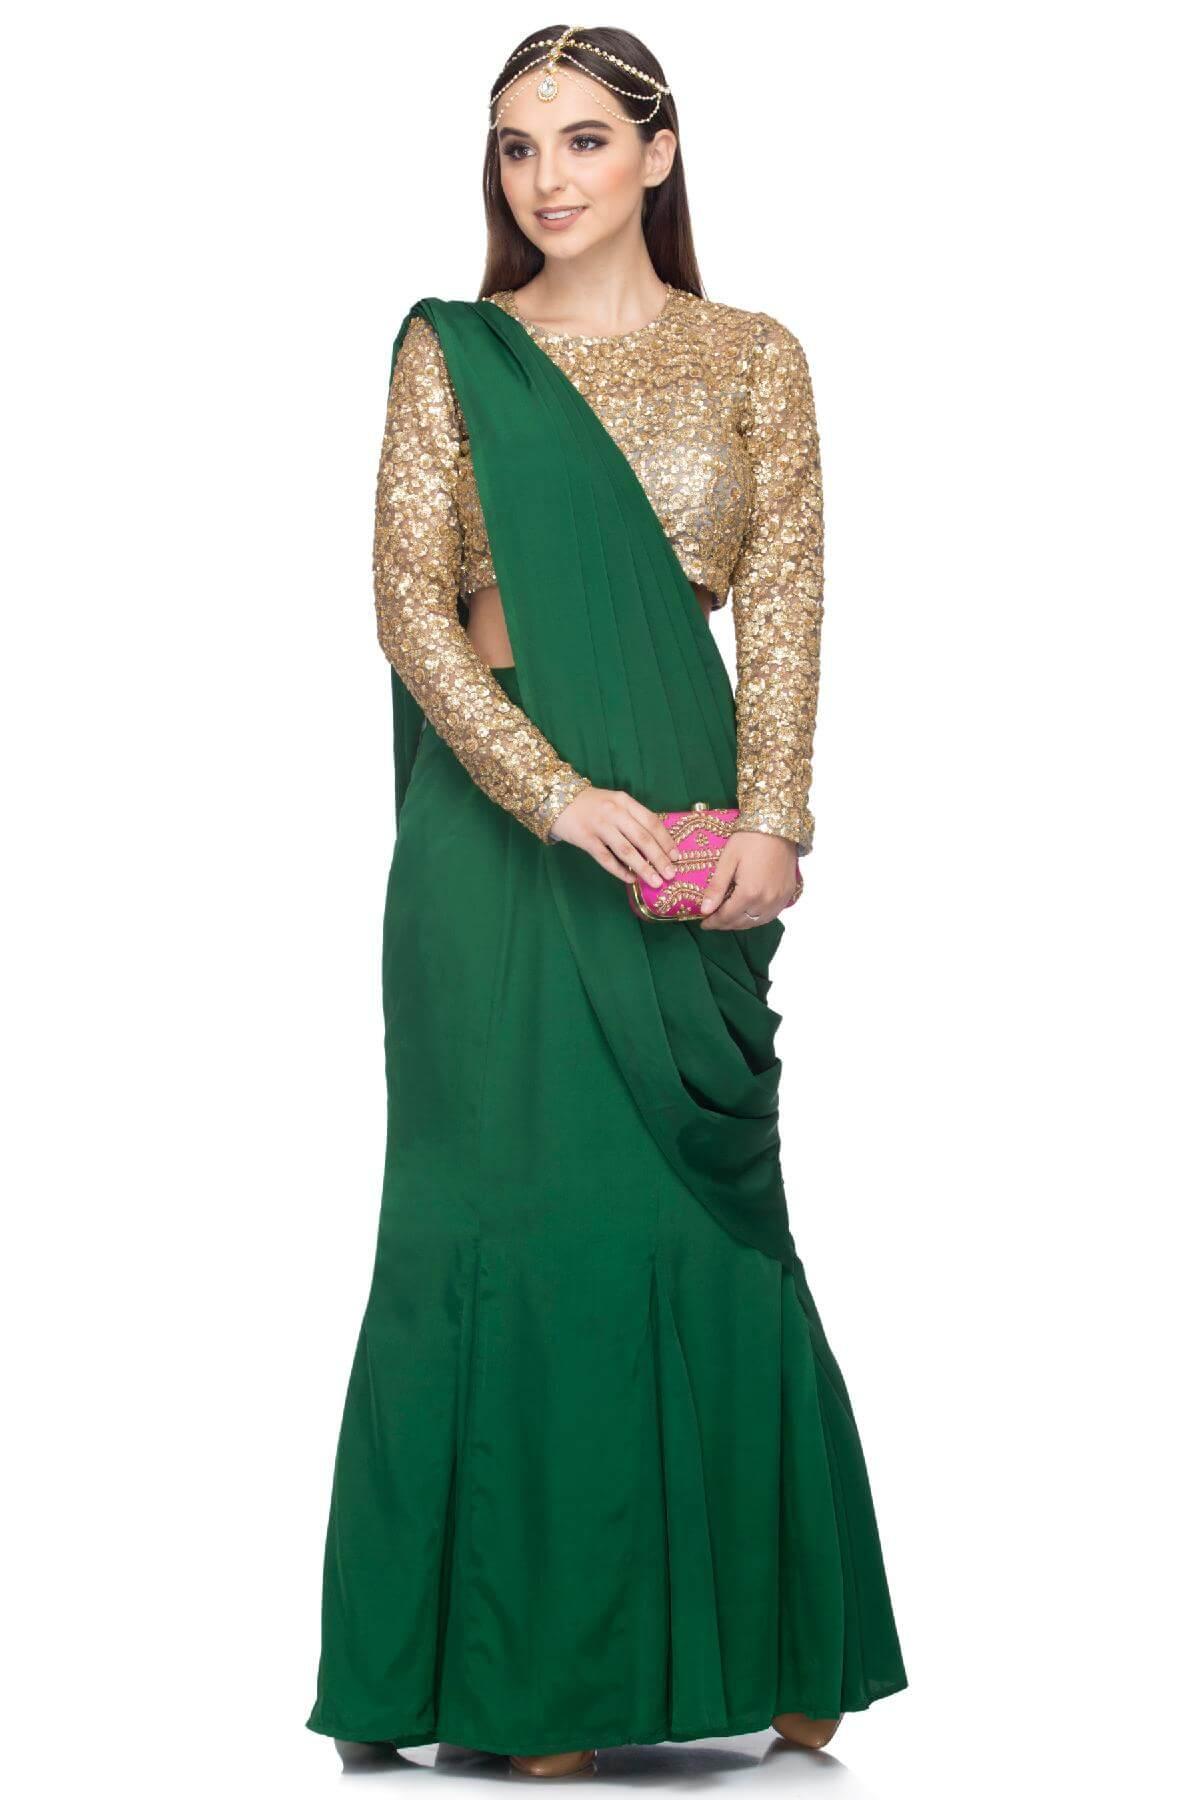 Green Lehenga Choli Indian Lengha Chunri Dress Skirt Top Sari Saree Sequins  Work | eBay